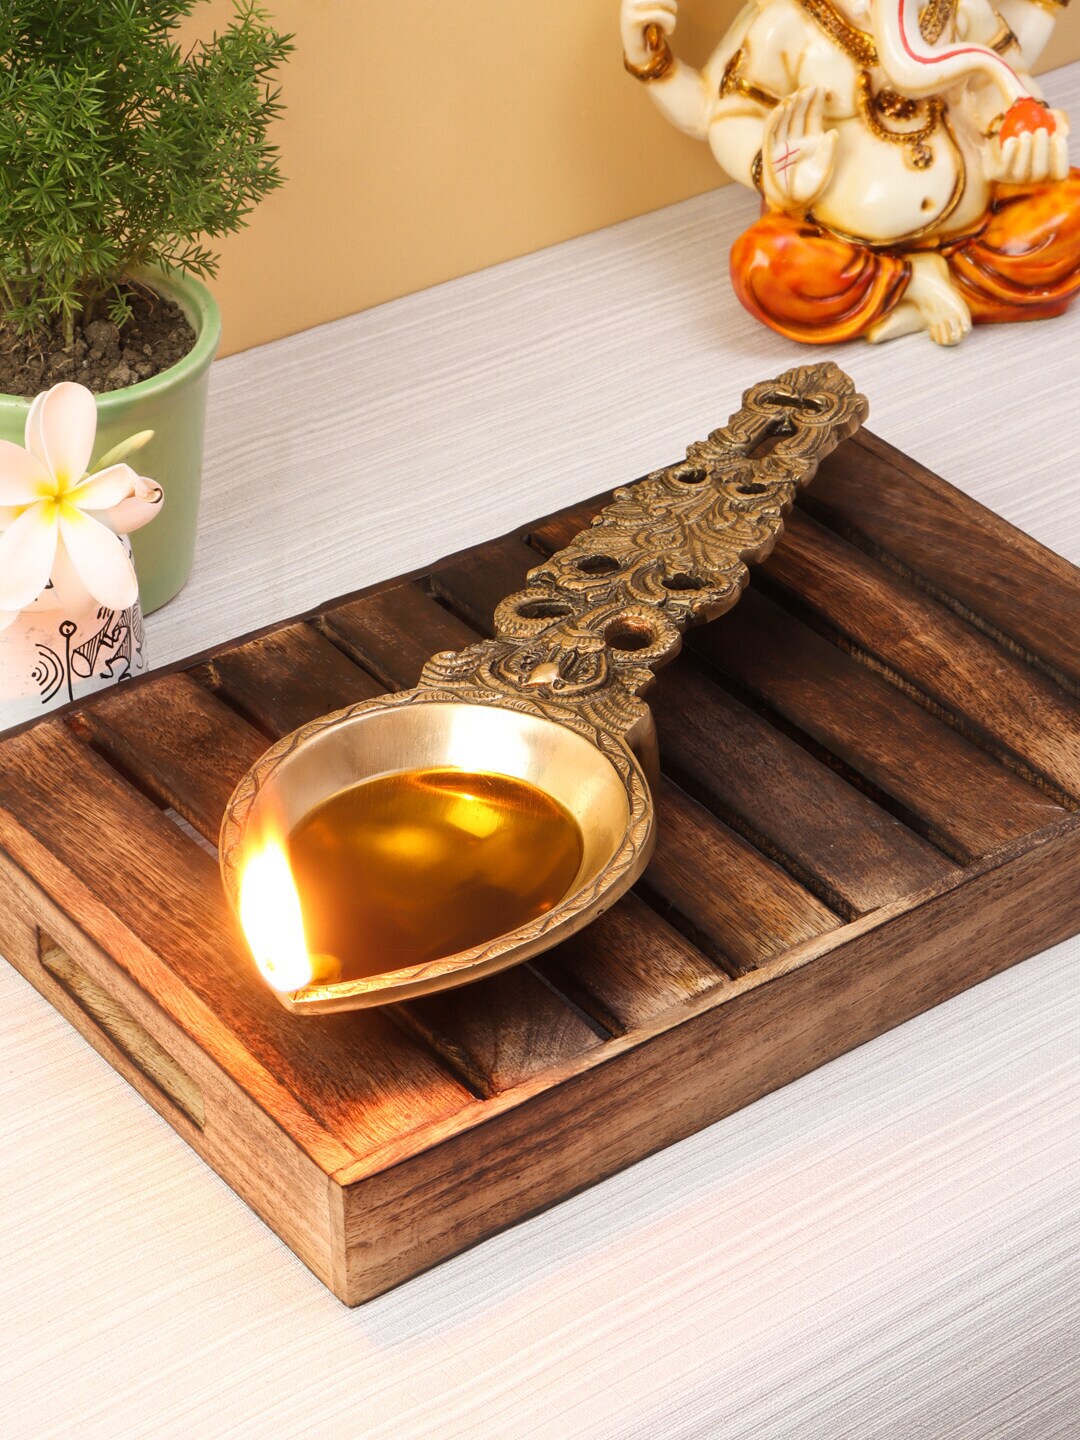 Imli Street Gold-Toned Ornate Ritual Spoon Casted Diya Price in India